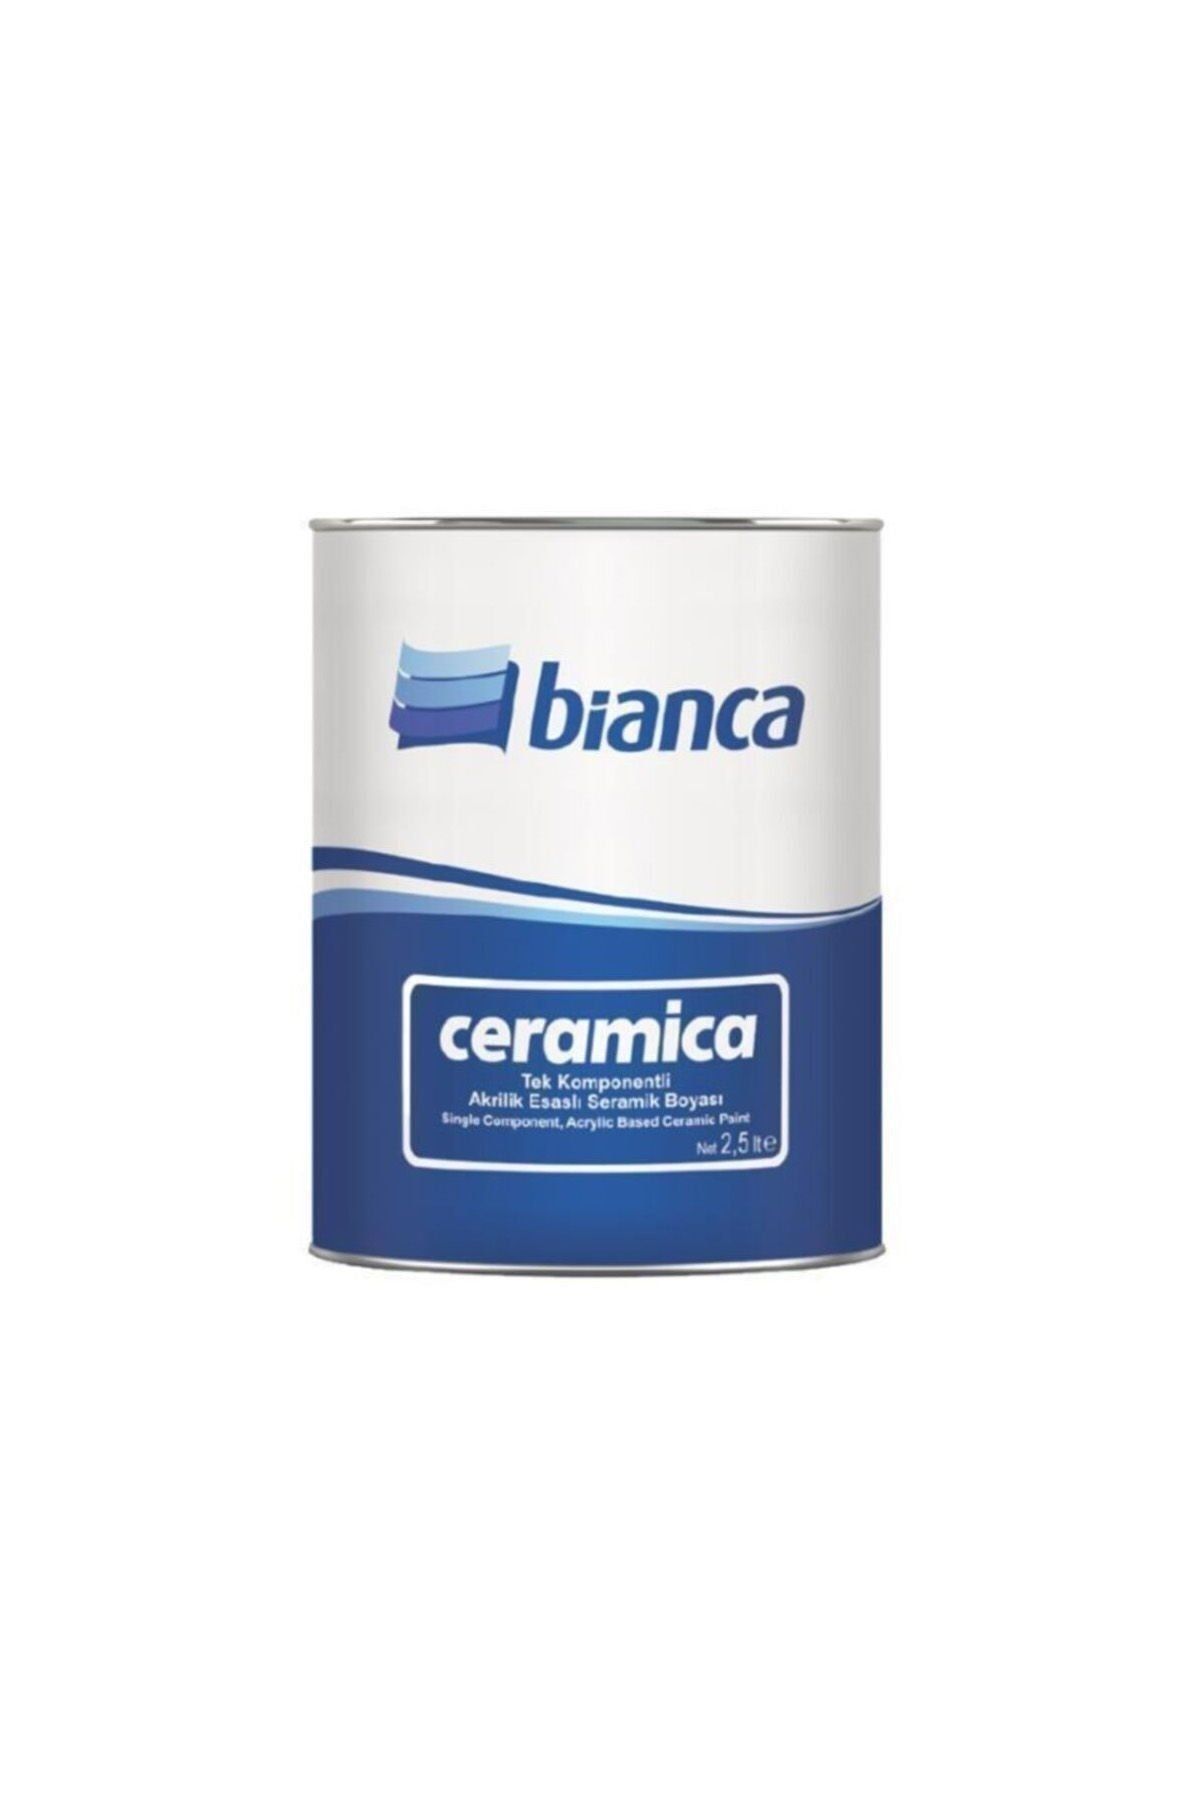 Bianca Ceramica - Seramik Boyası 0.75 lt